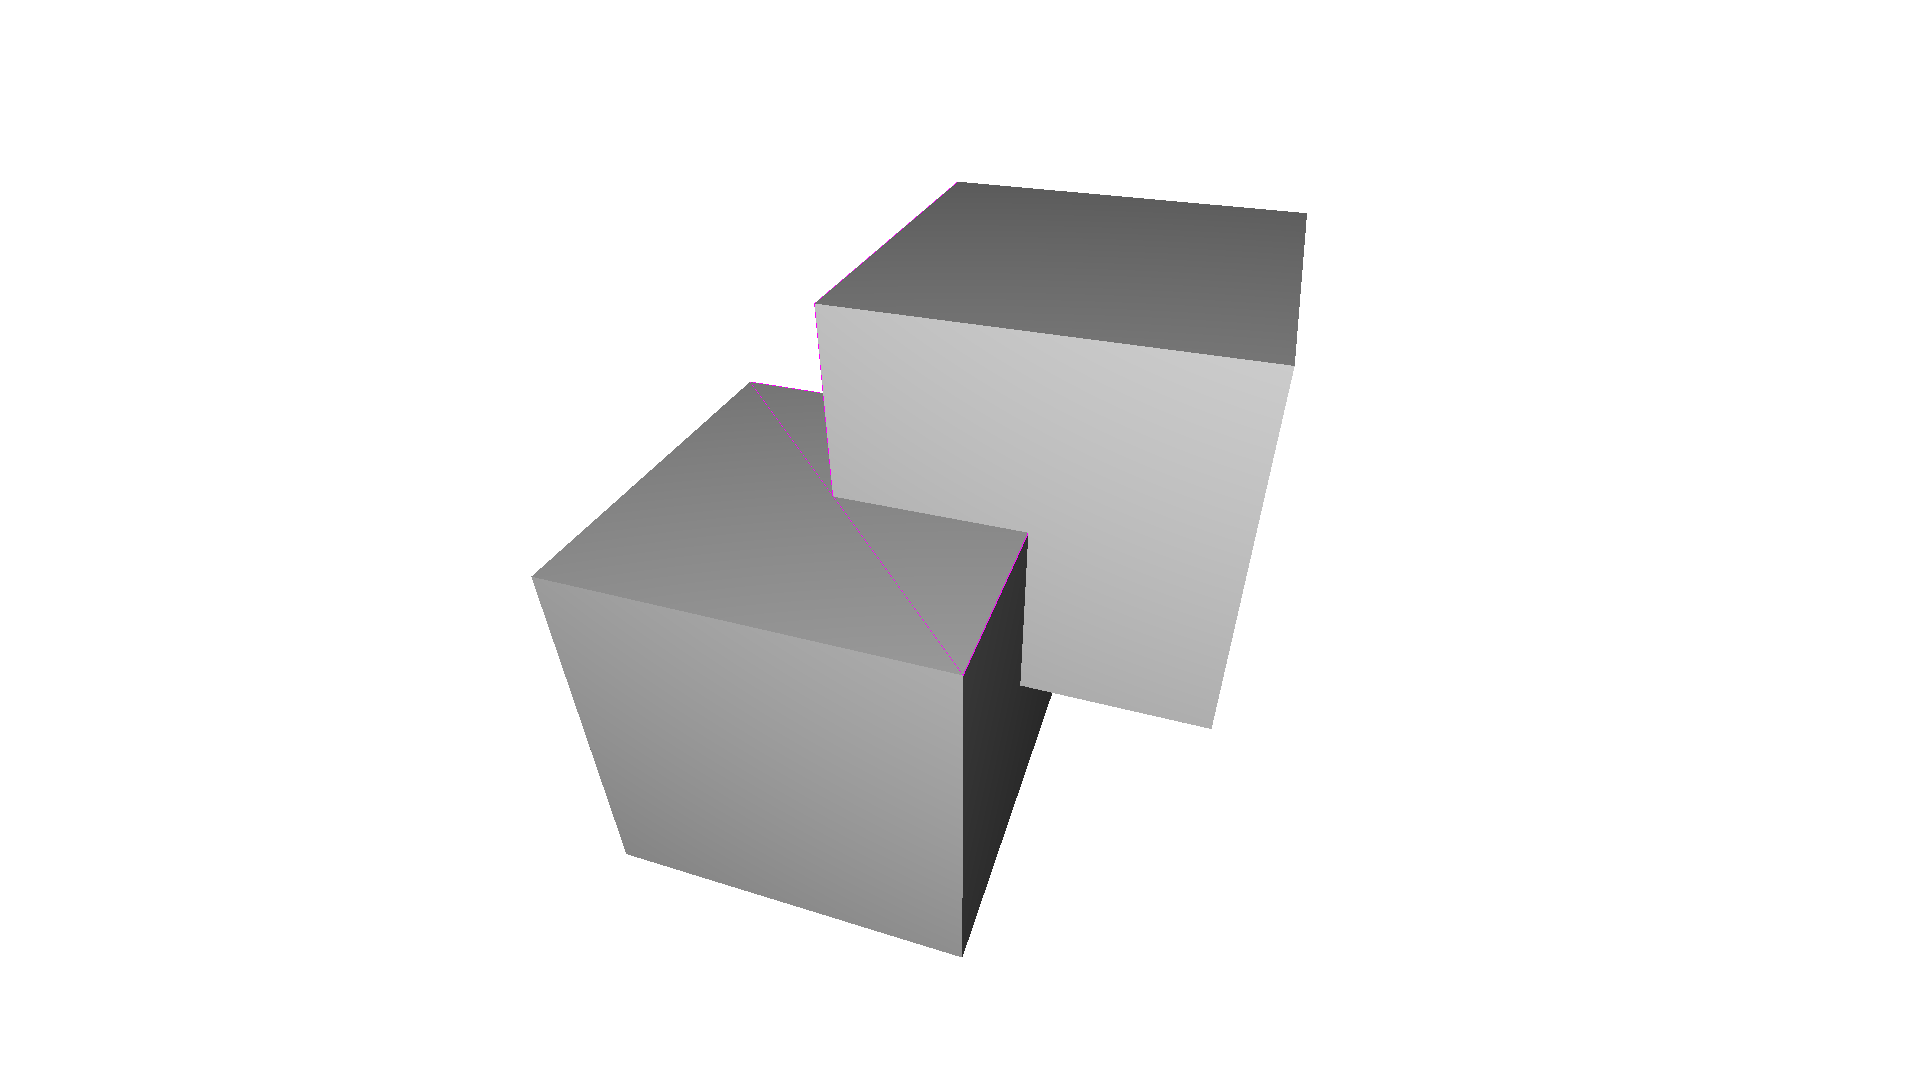 ../../_images/tutorial_geometry_mesh_16_11.png